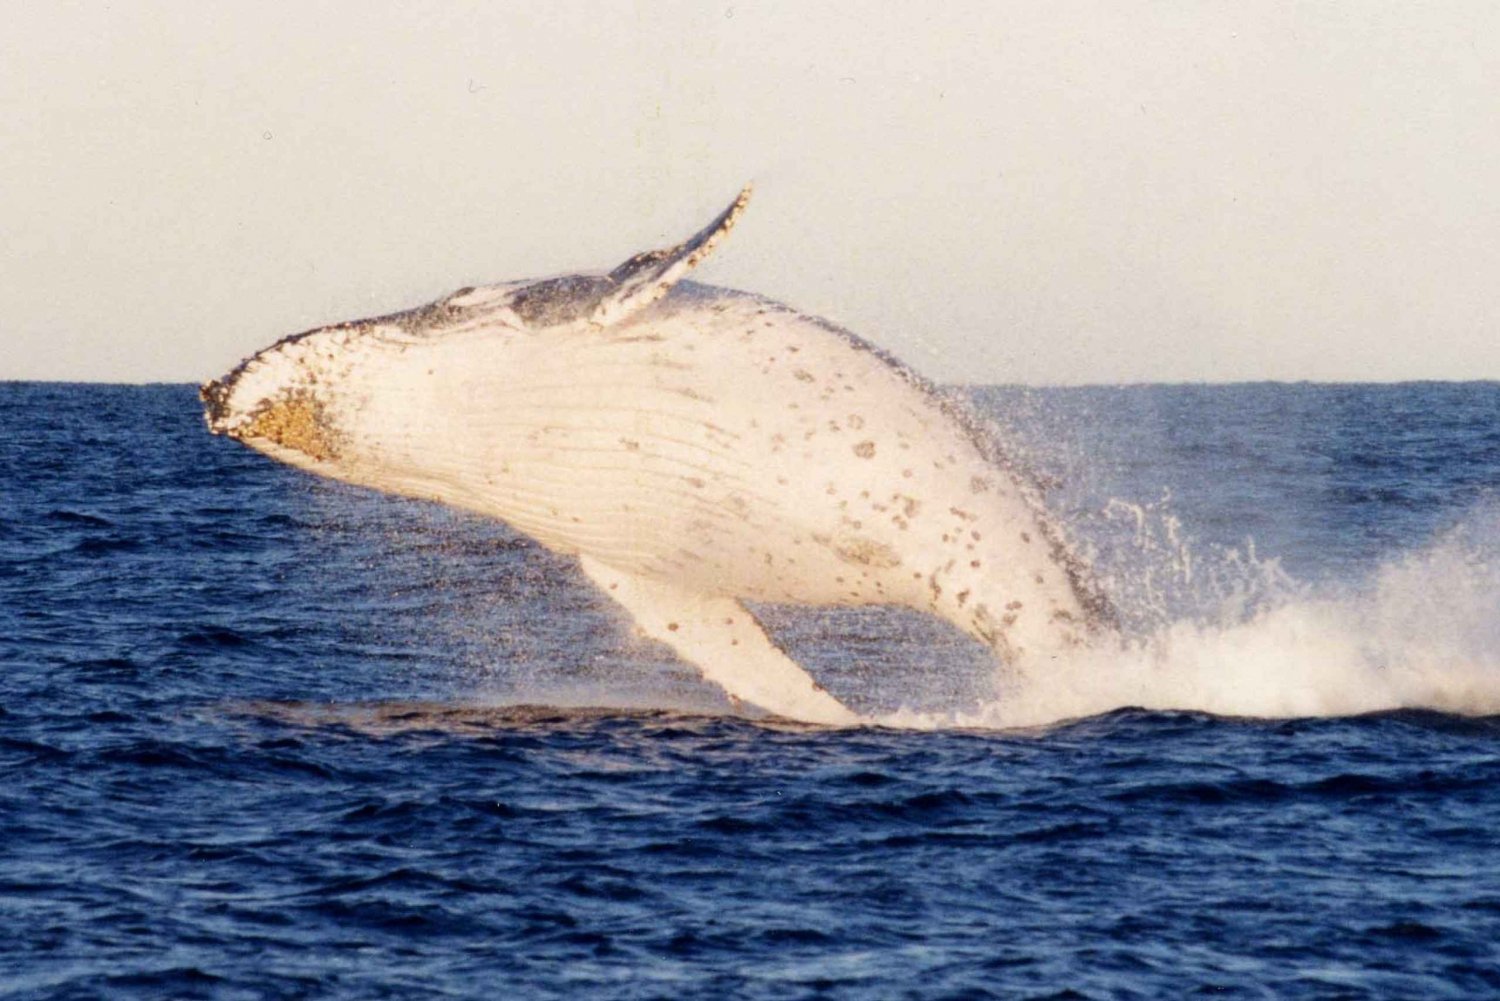 Kombiferie med hvaler og klitter i Port Stephens for en lille gruppe